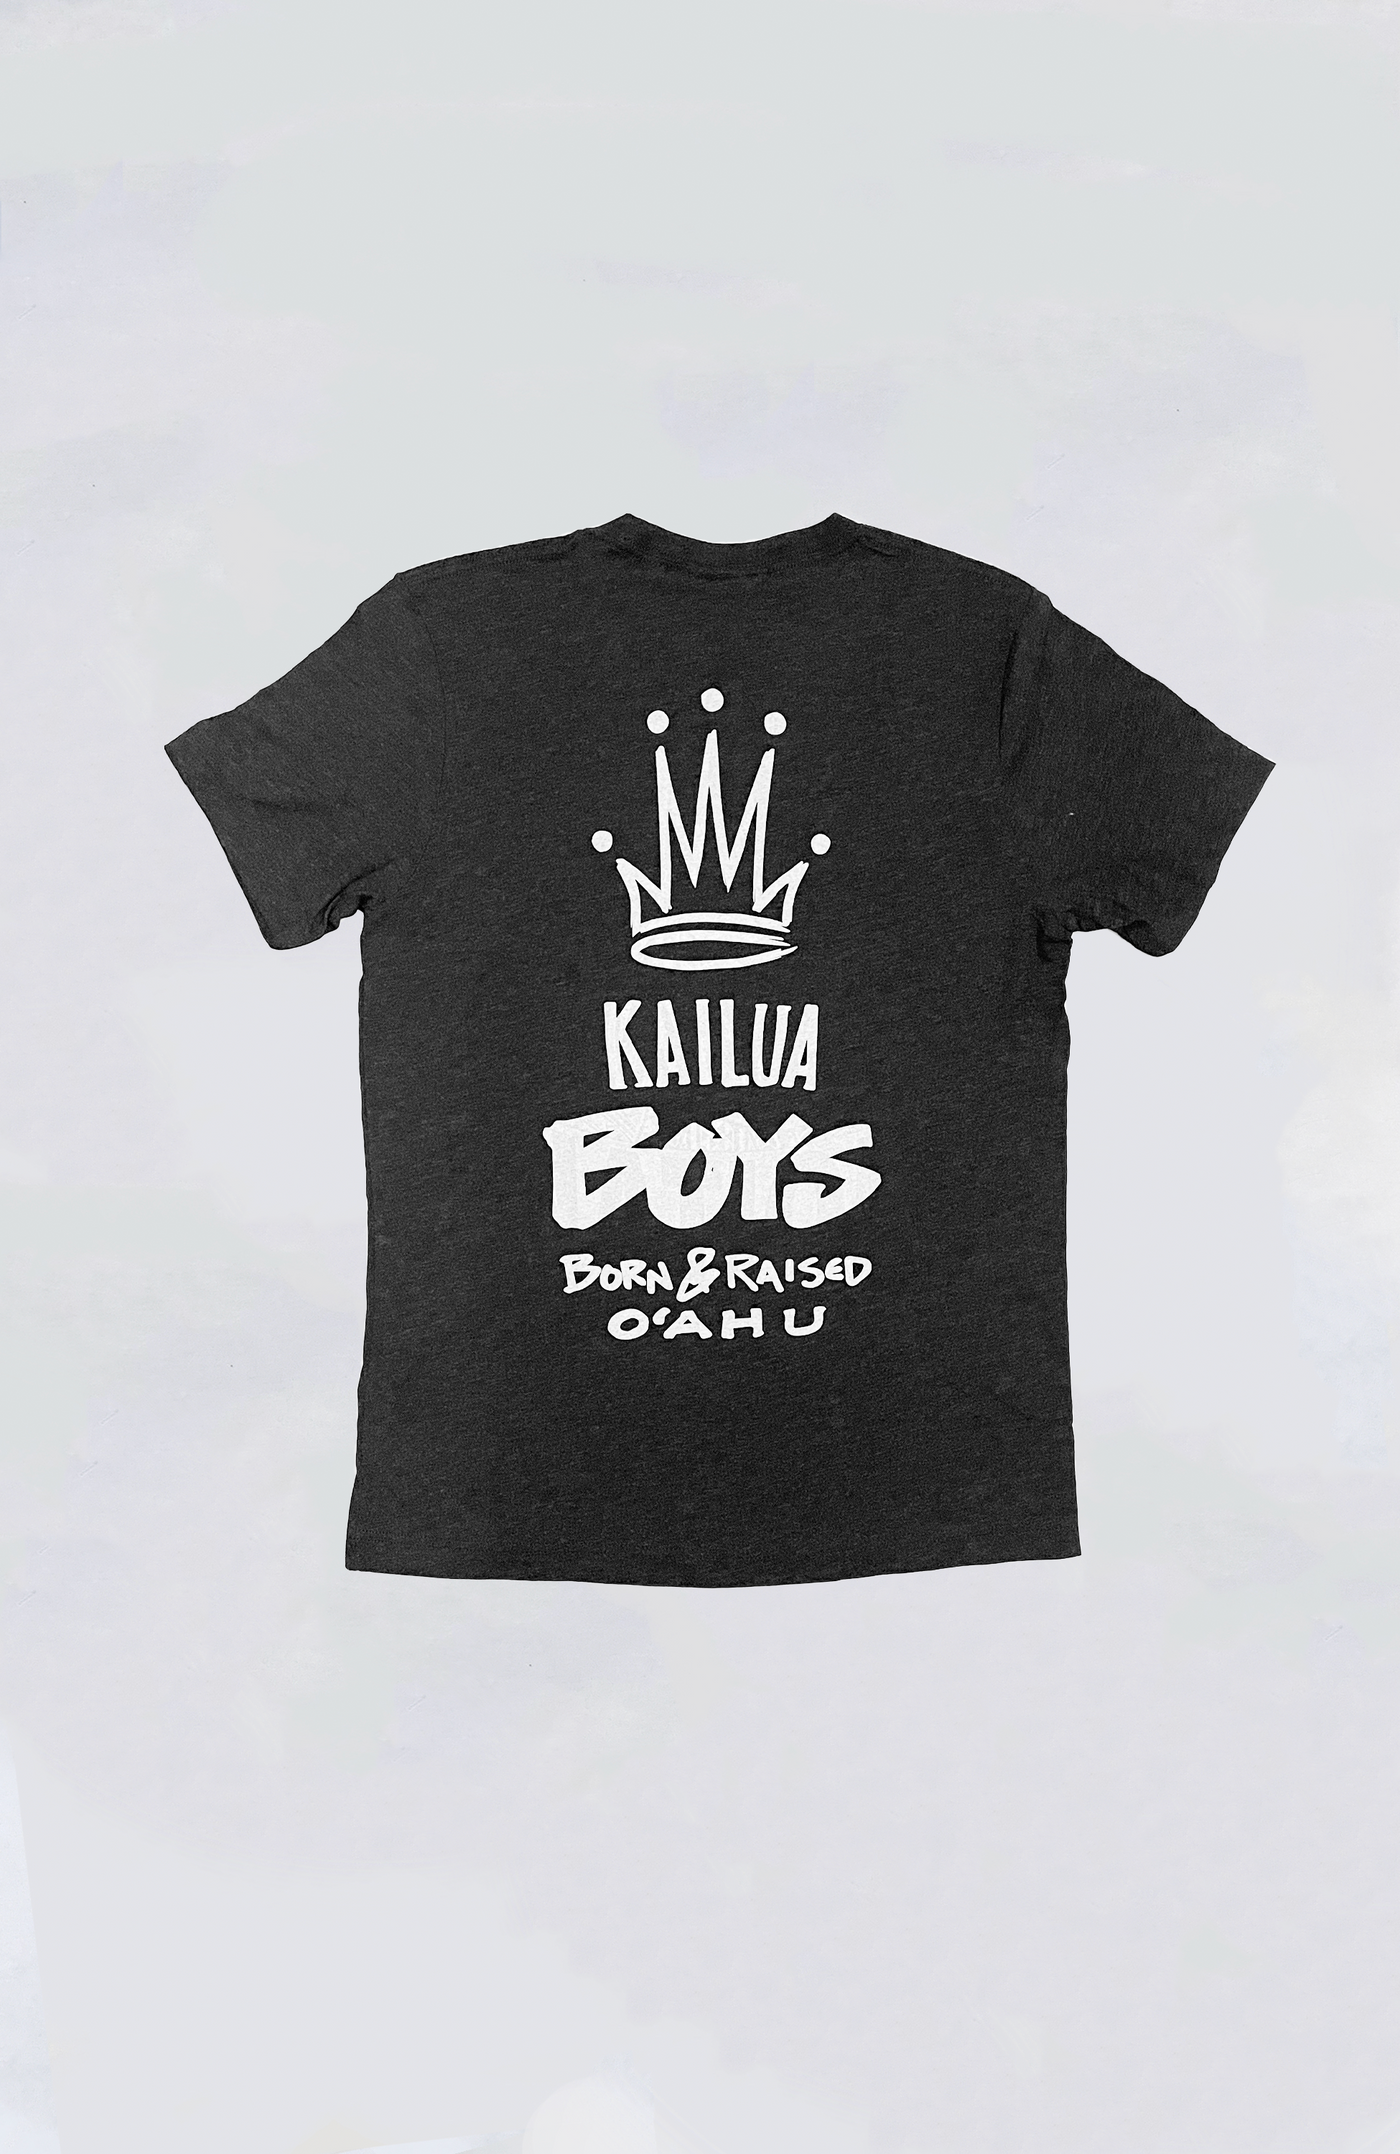 Kailua Boys - KB King Premium Blend Tee